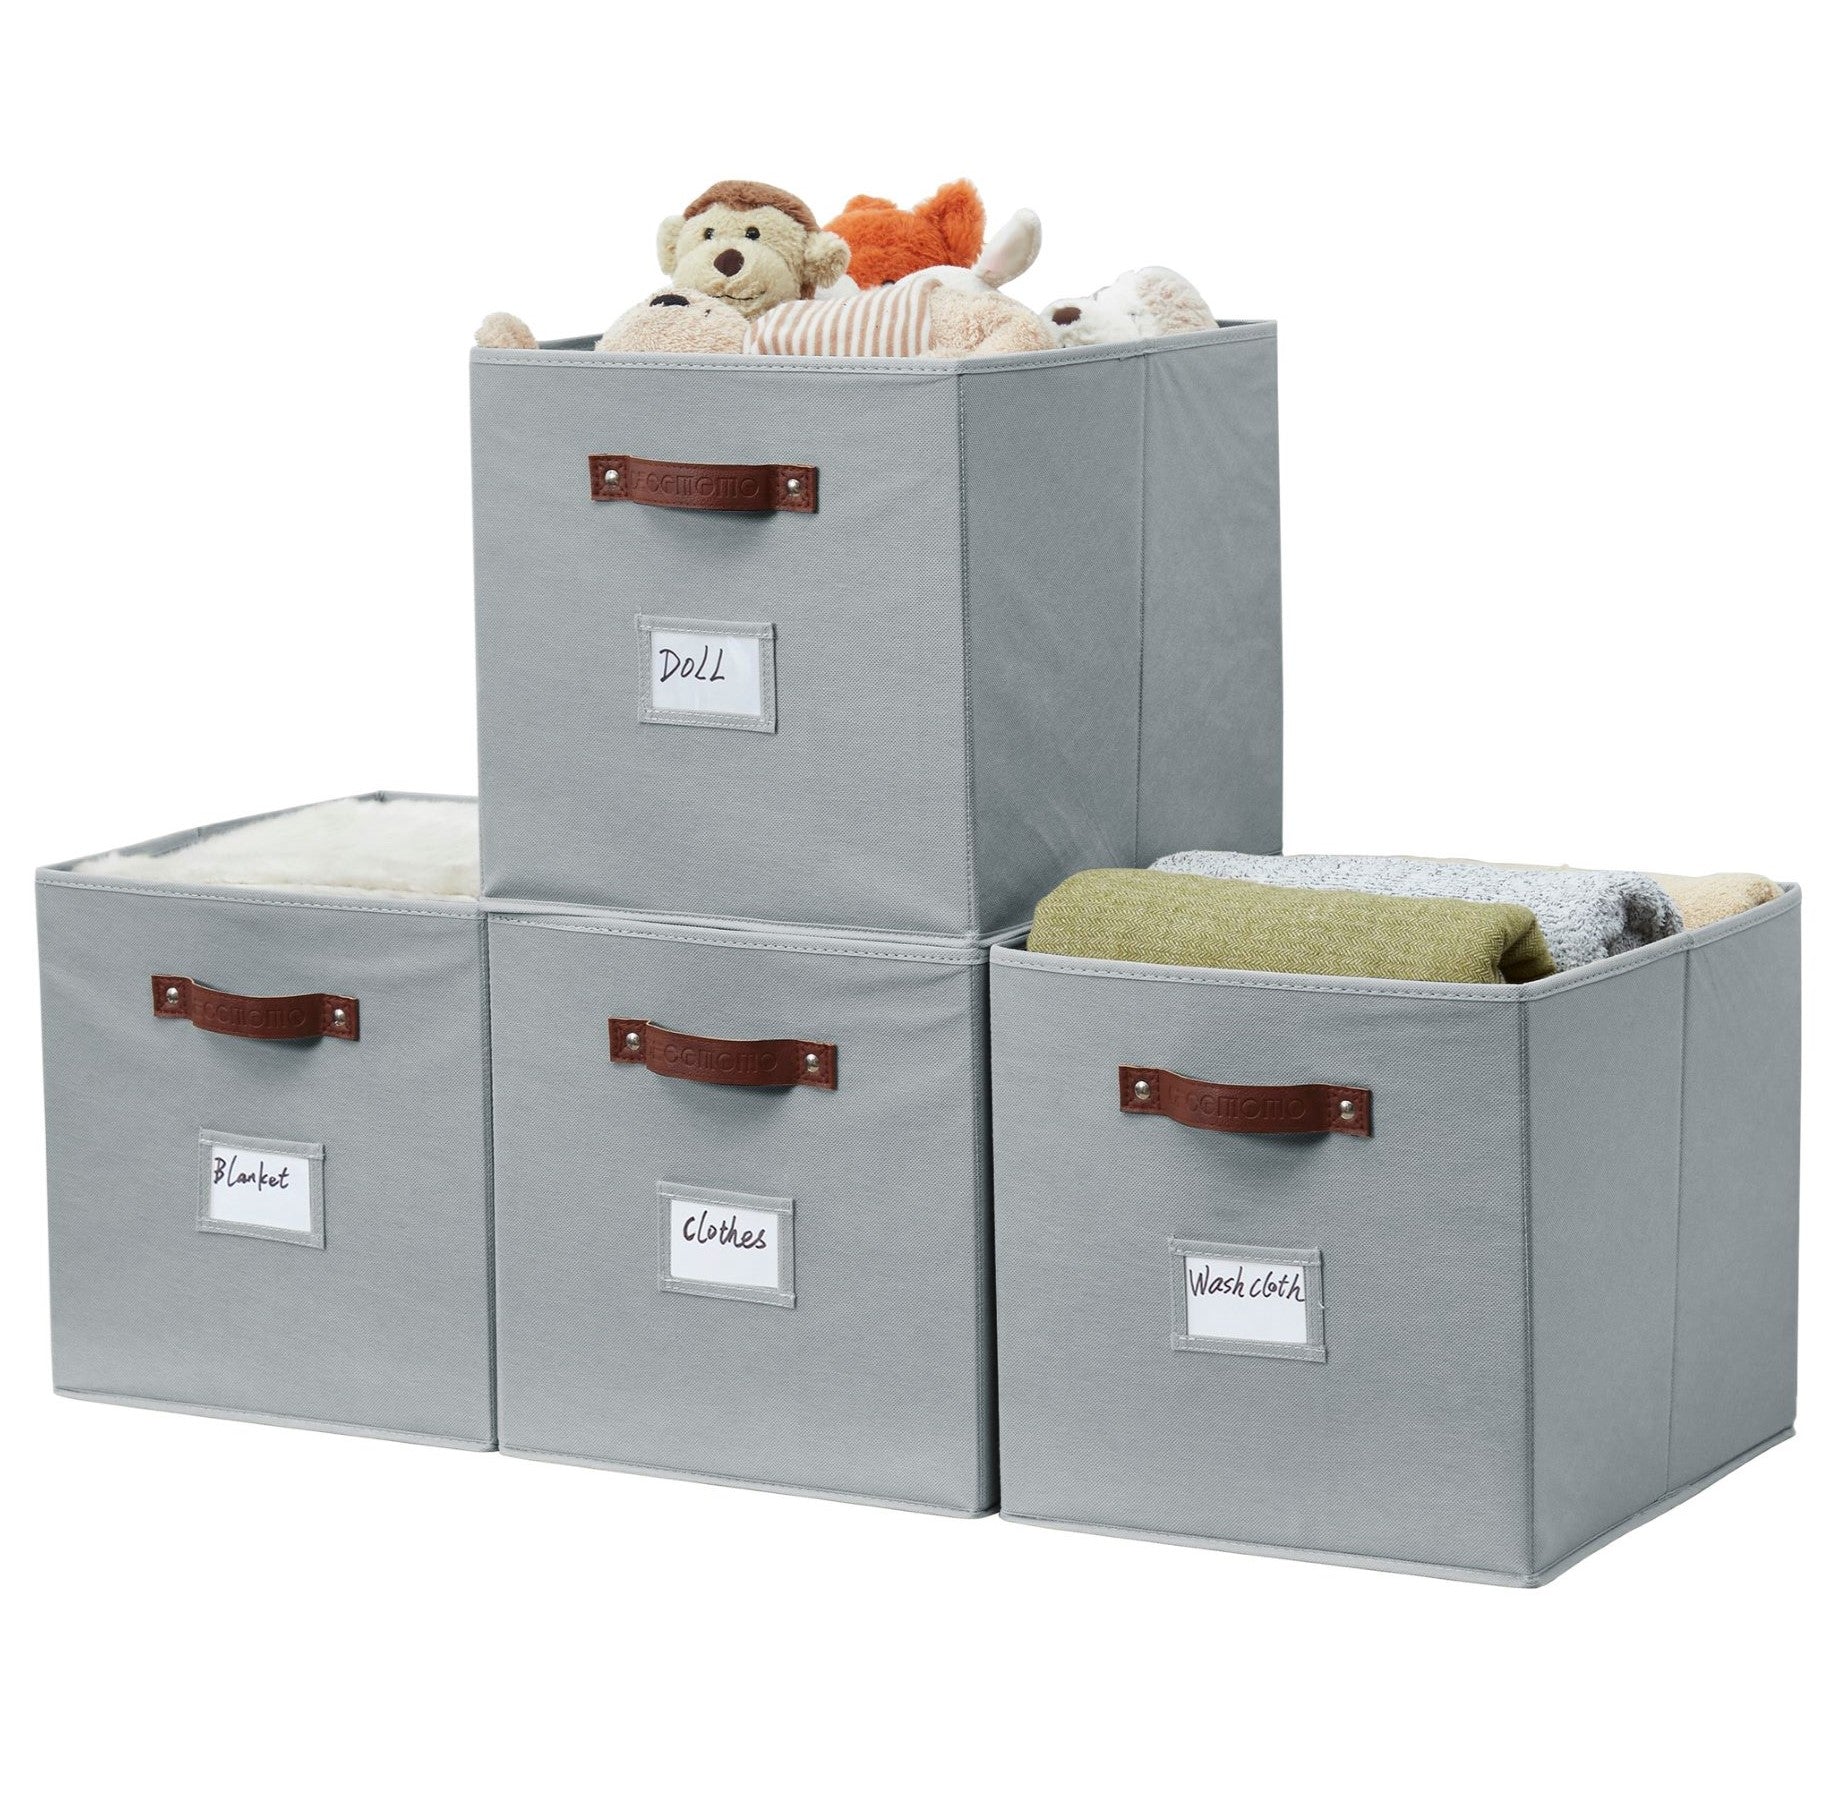 mDesign Soft Fabric Closet Storage Organizer Cube Bin, 4 Pack